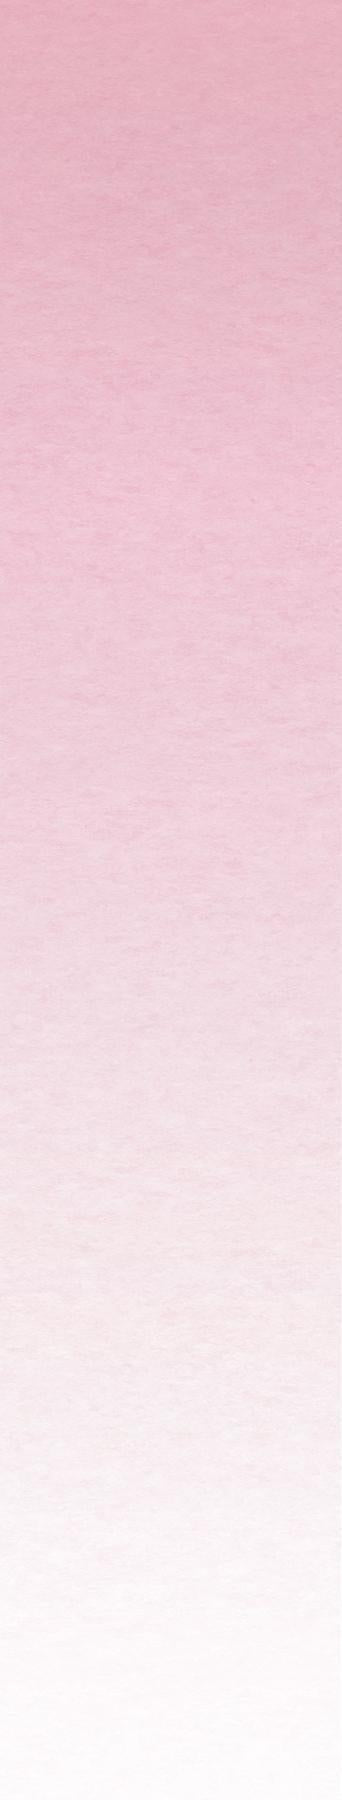 Roommates Pink Aura Ombre Peel & Stickmural Pink Wallpaper